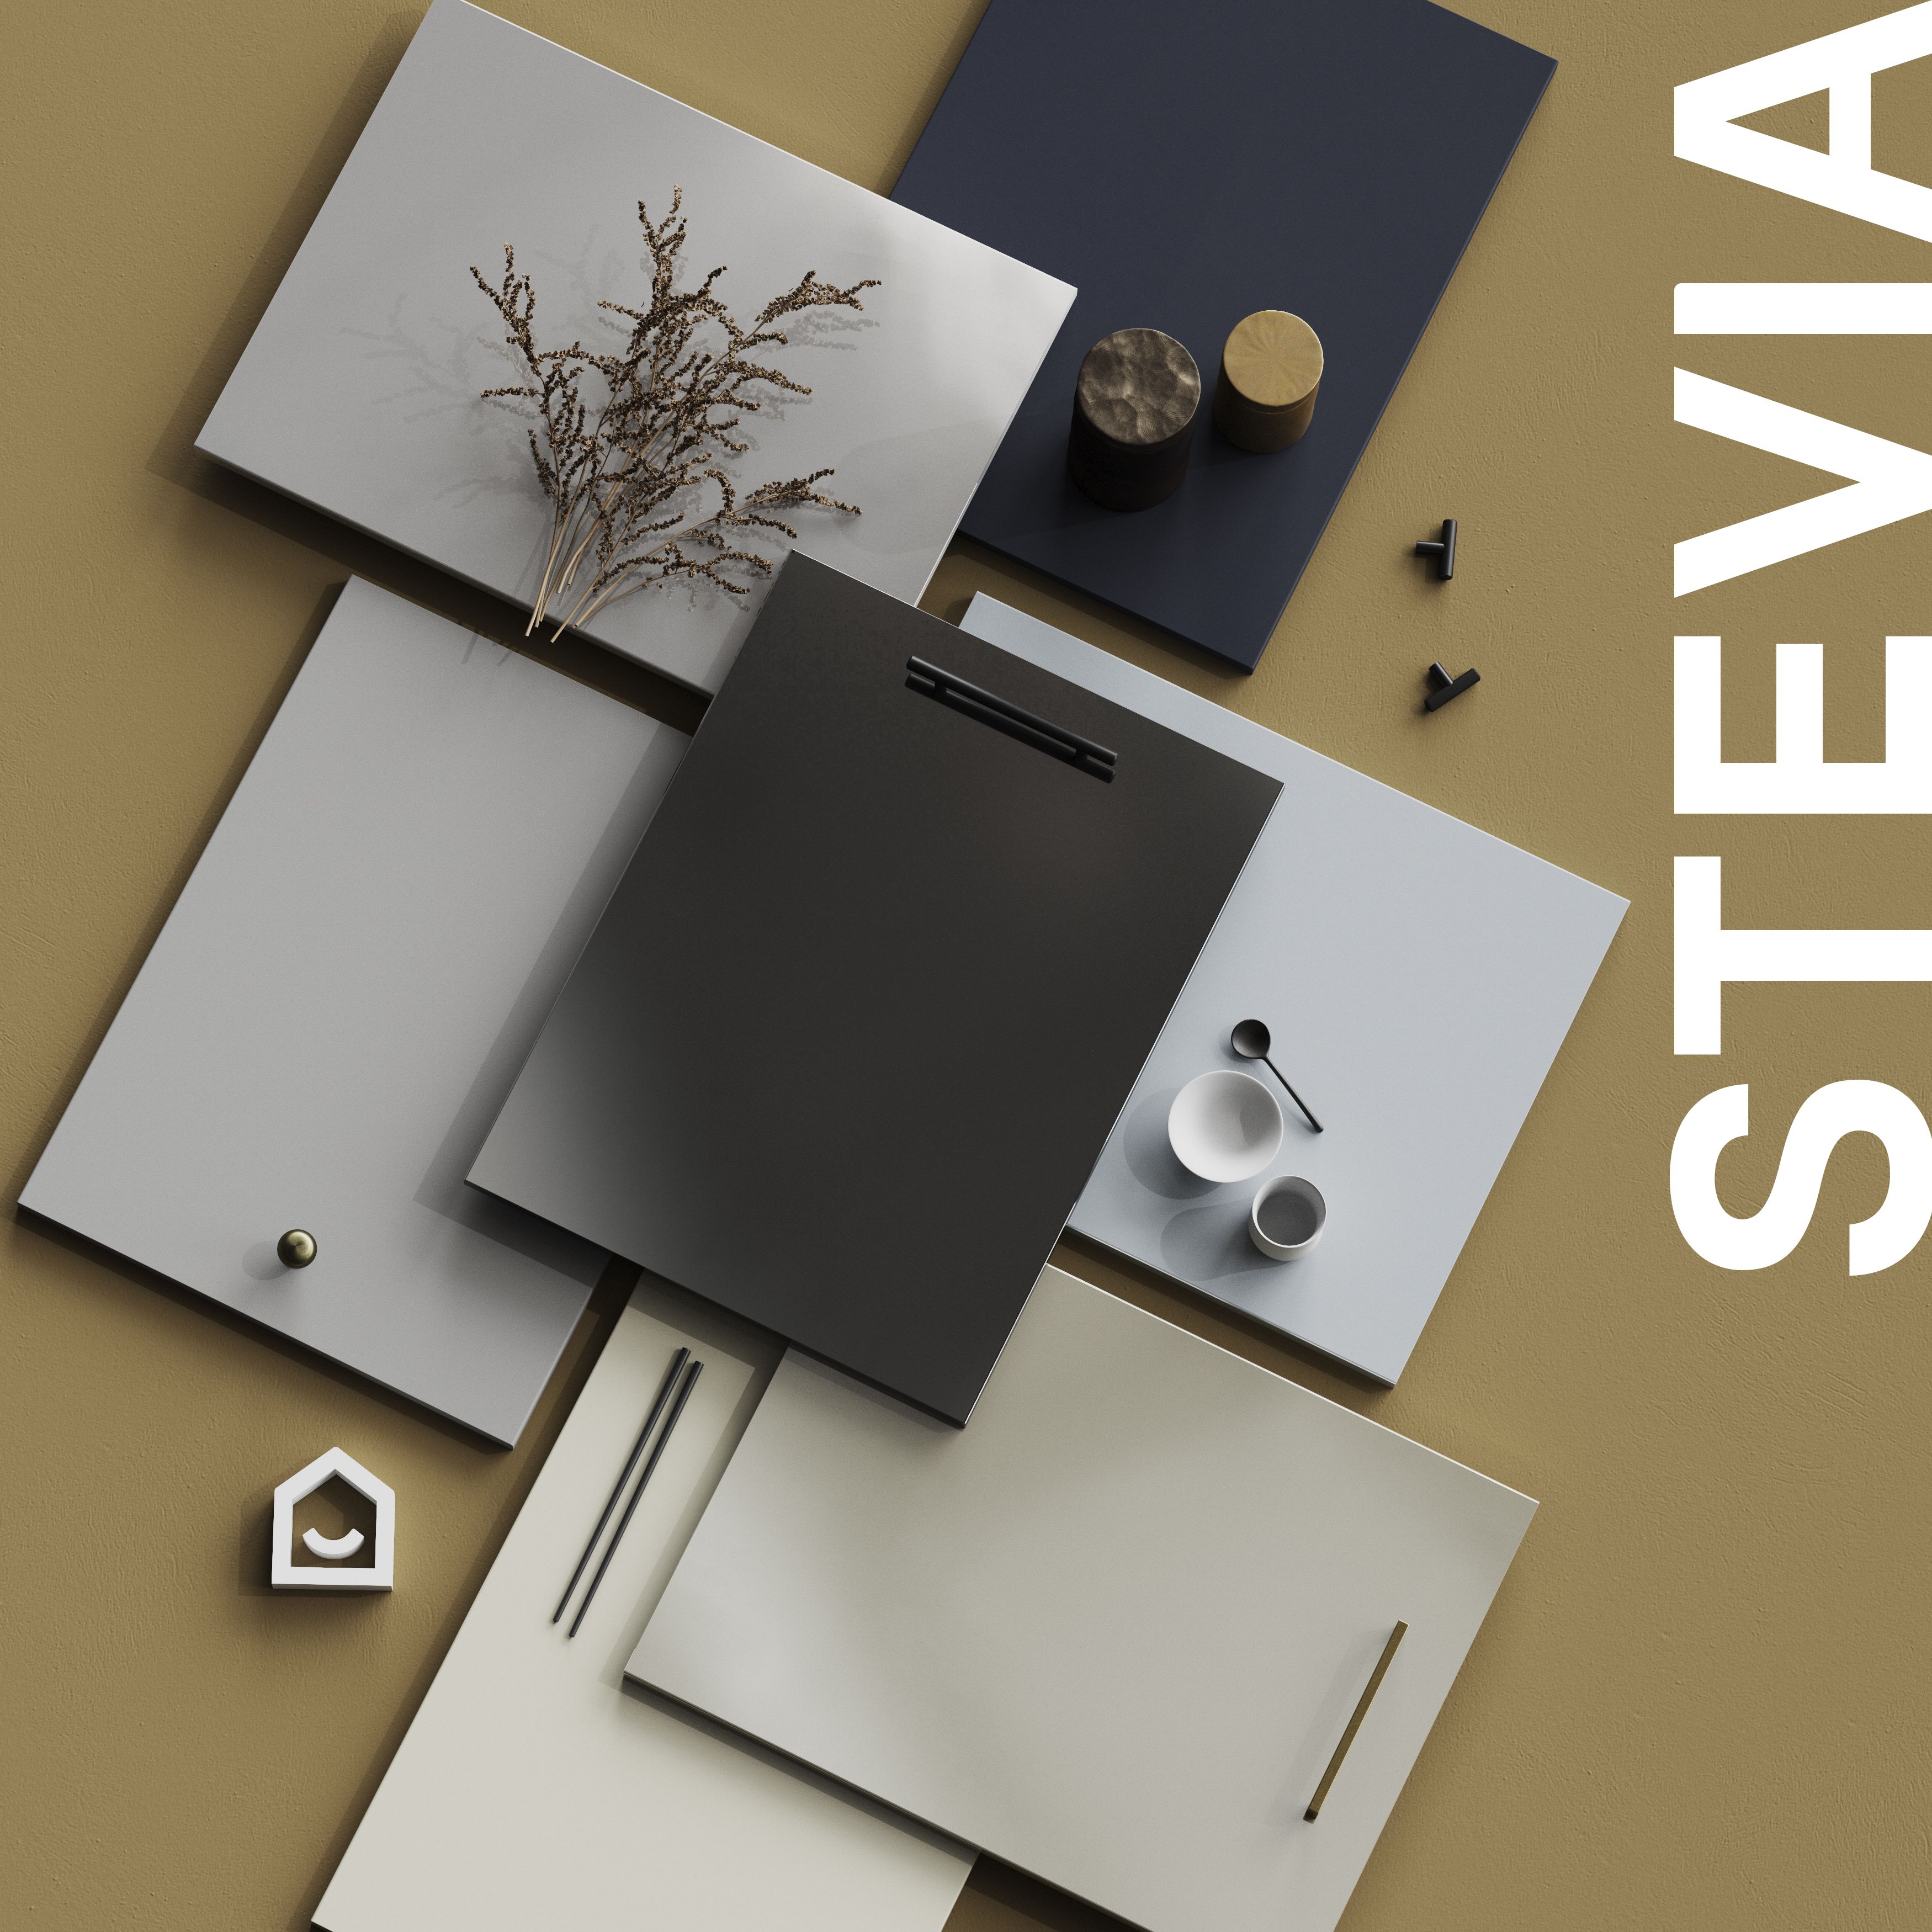 GoodHome Stevia Gloss grey slab Tall appliance Cabinet door (W)600mm (H)723mm (T)18mm